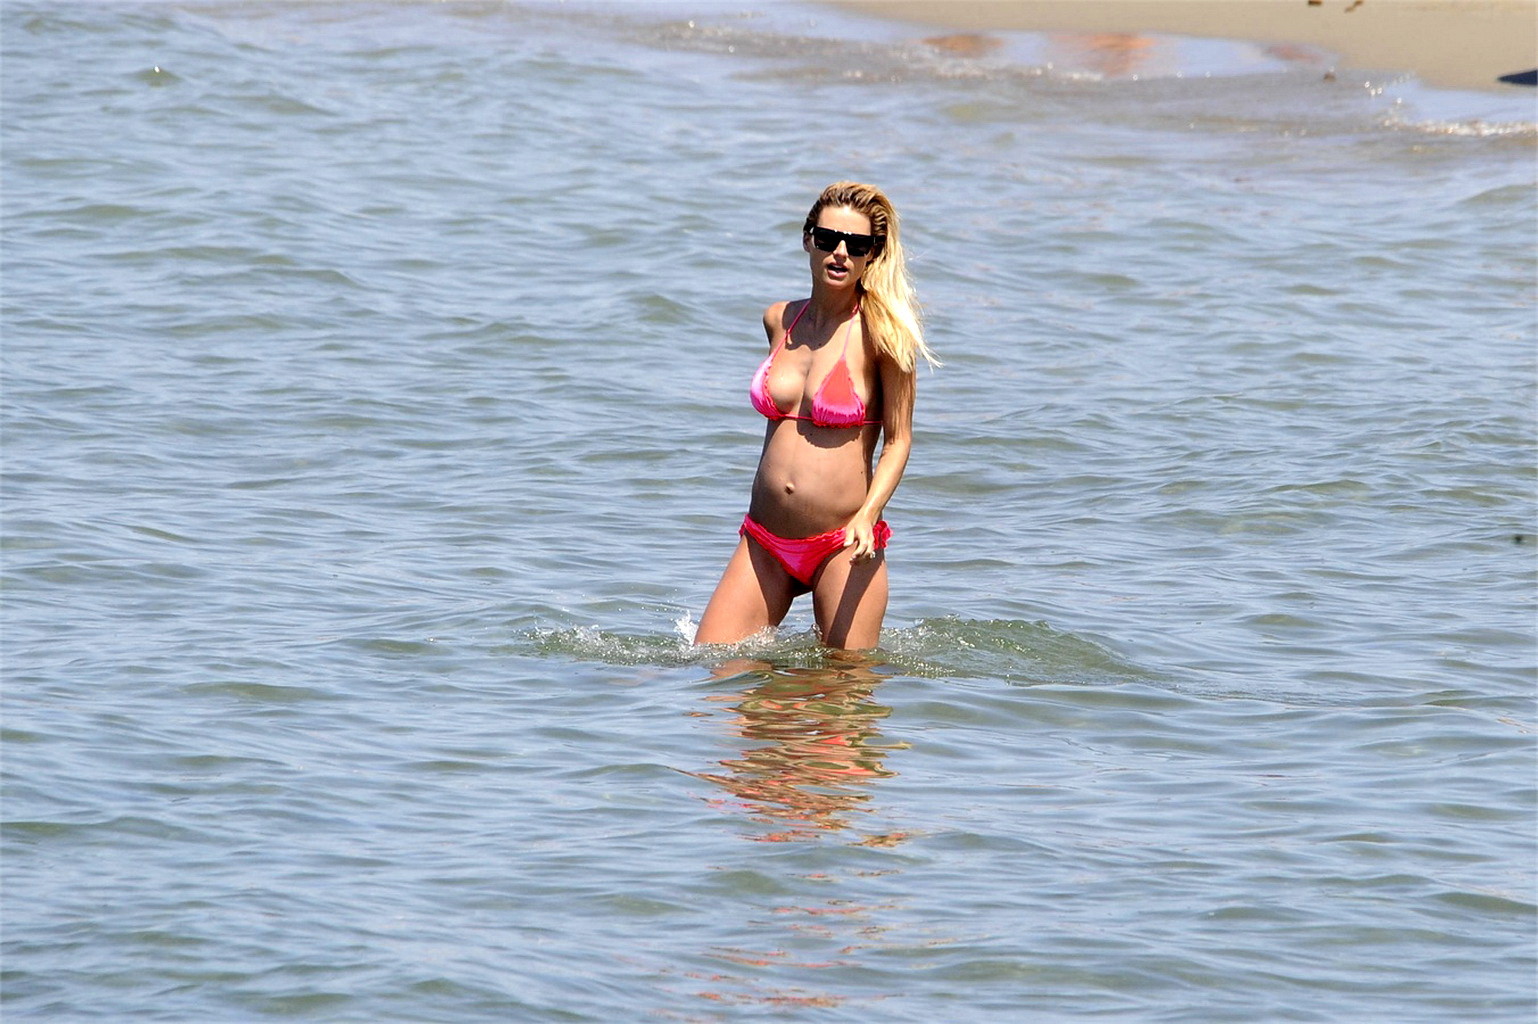 Michelle hunziker embarazada con un bikini en la playa de forte dei marmi, ita
 #75227881